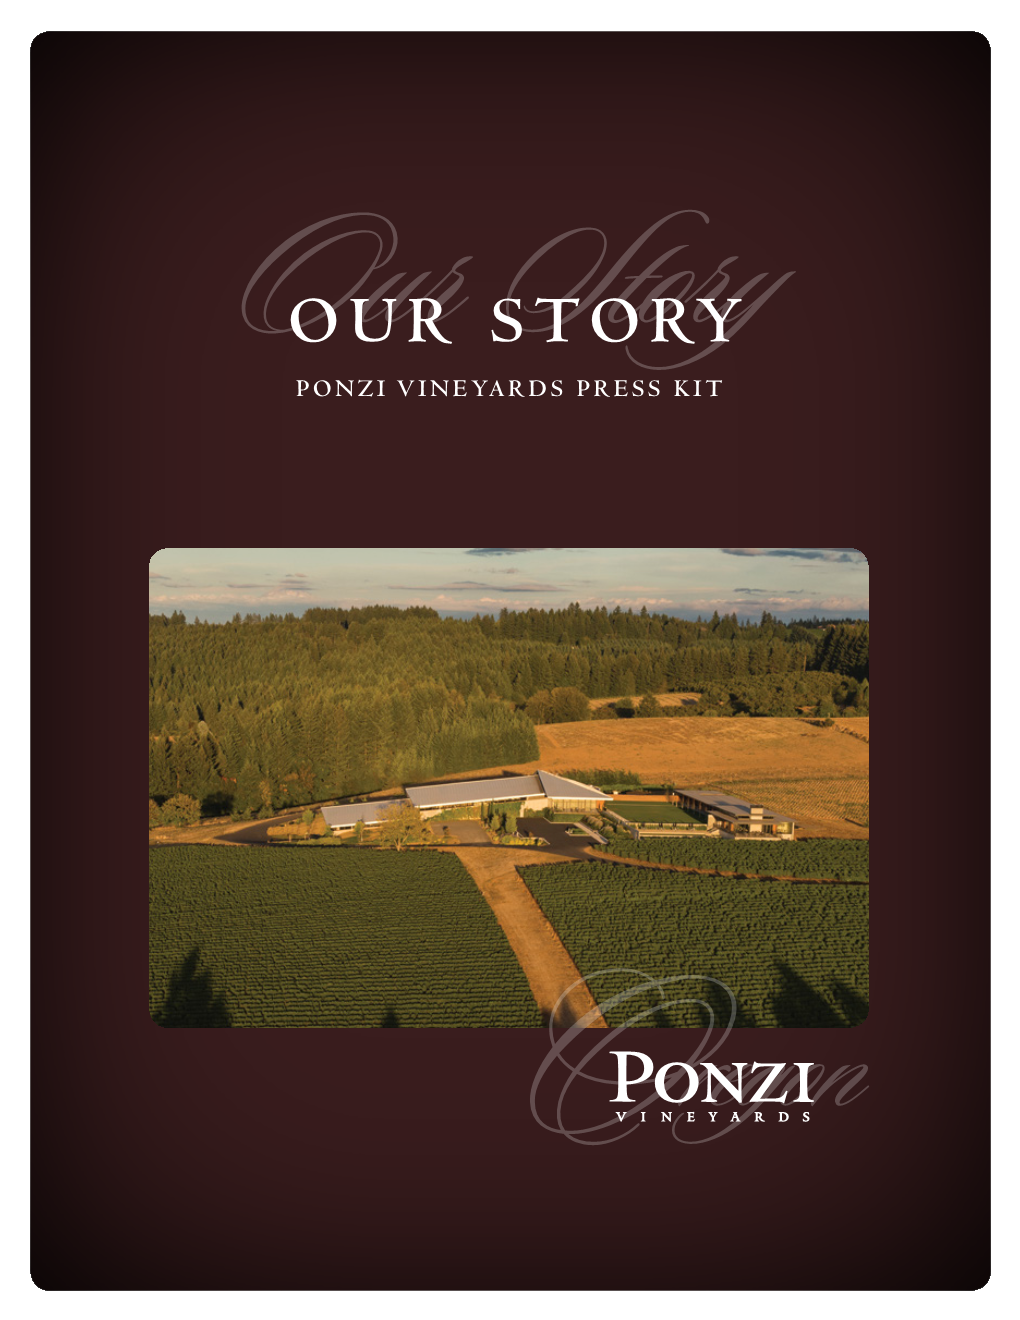 PONZI VINEYARDS PRESS KIT Ourour STORY Story